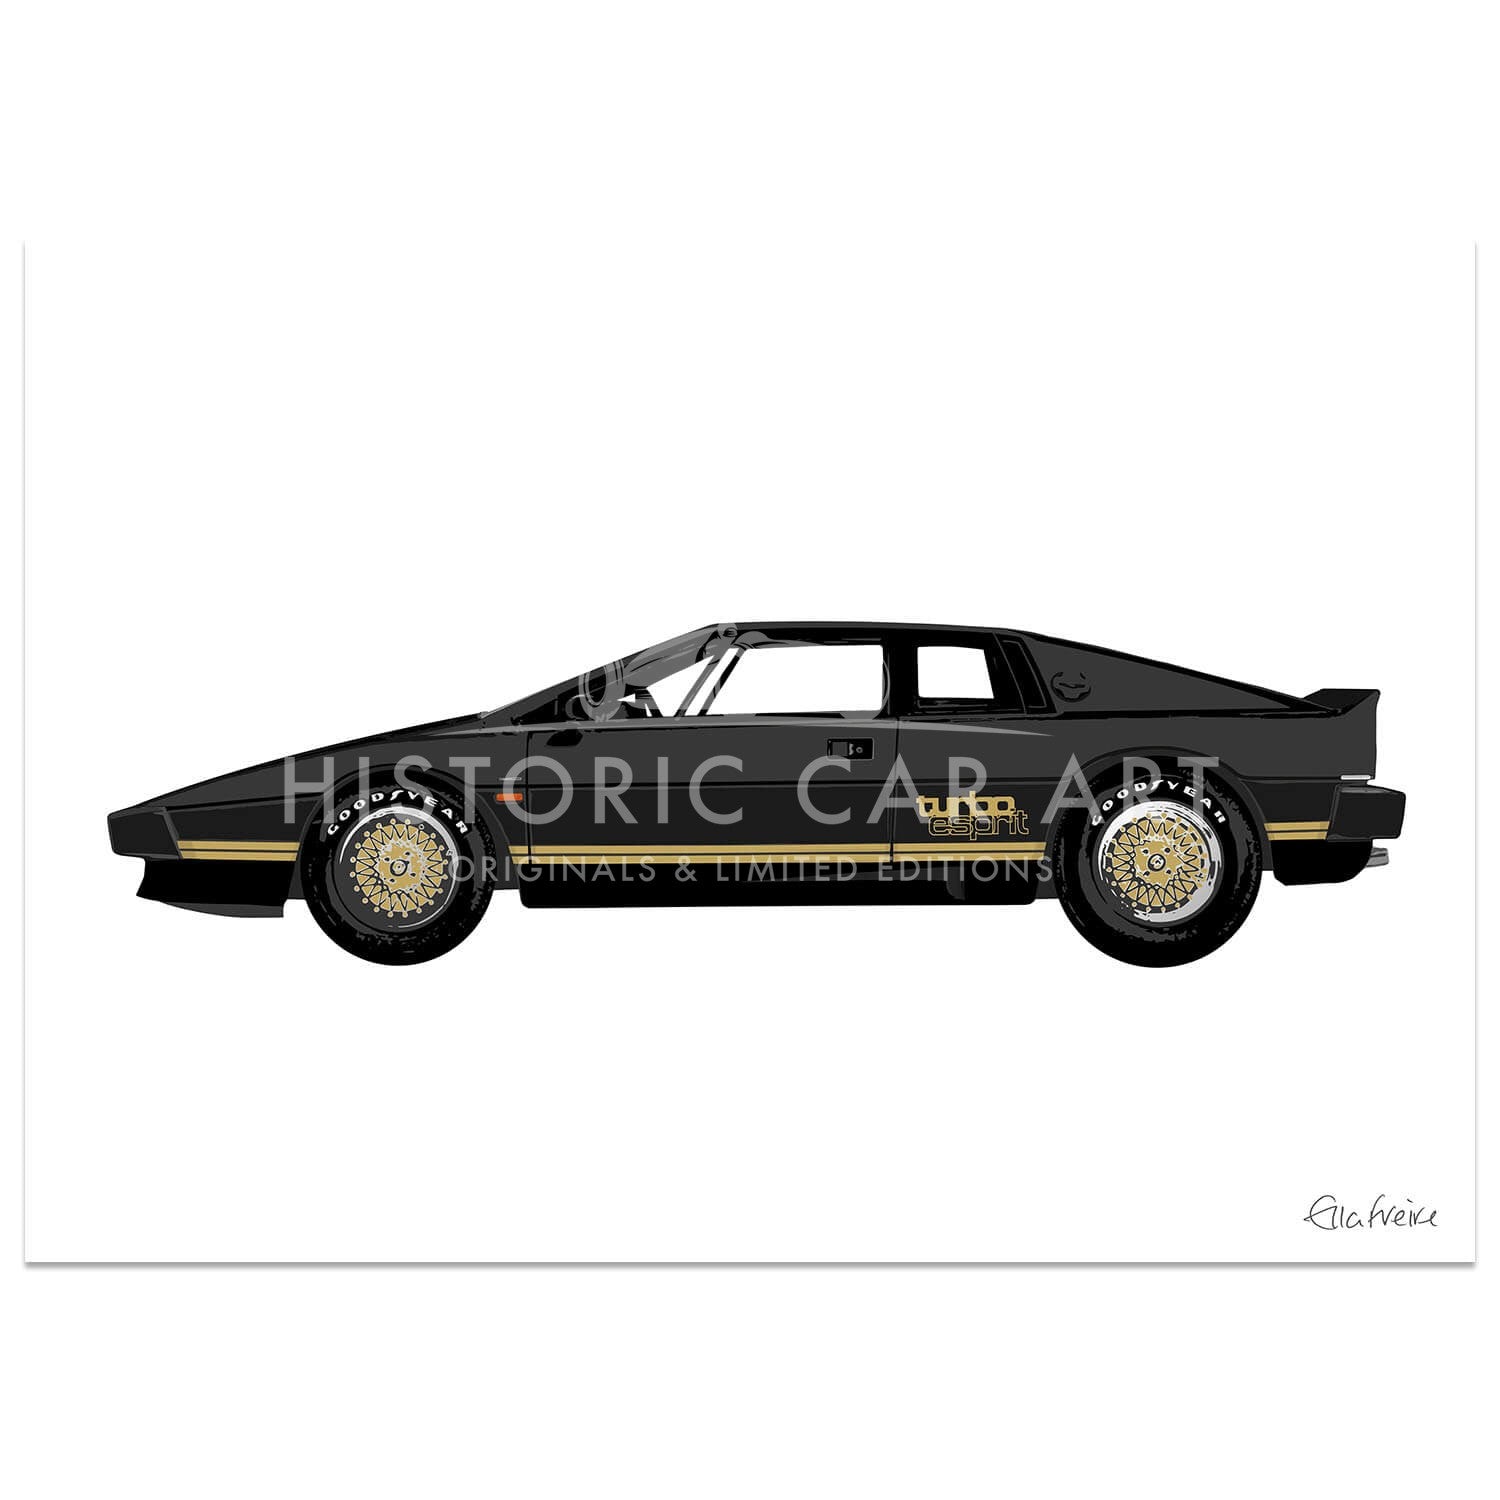 Lotus Esprit Turbo | Black | Art Print